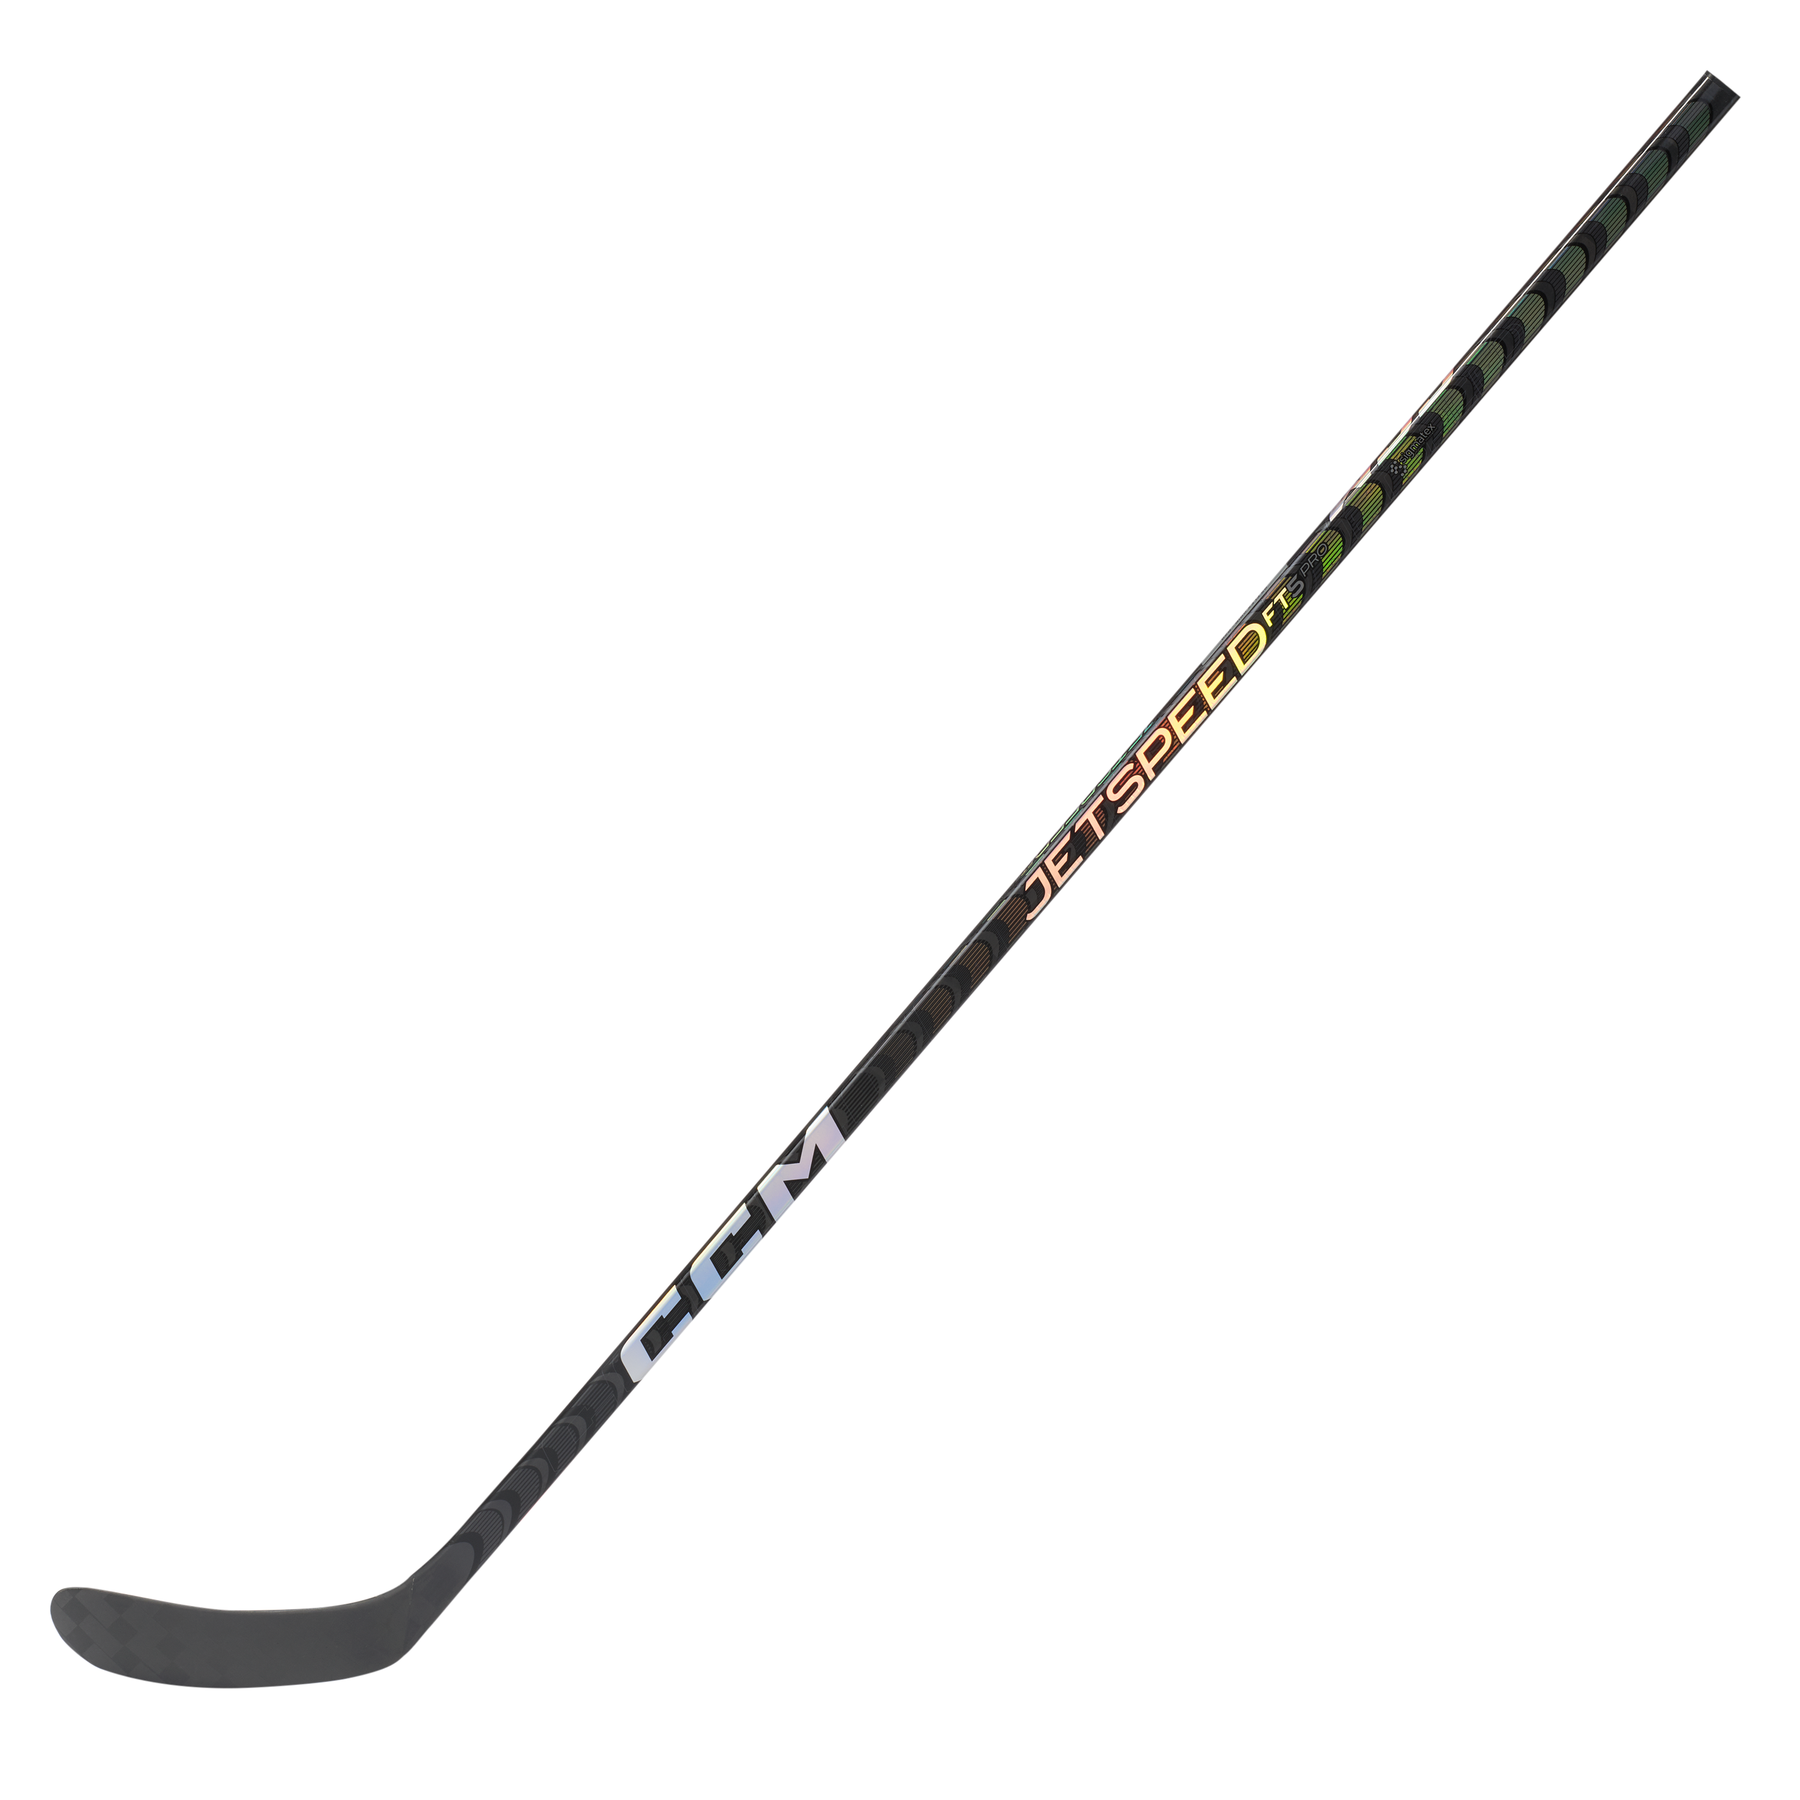 CCM JetSpeed FT5 Pro bâton de hockey senior (chrome)